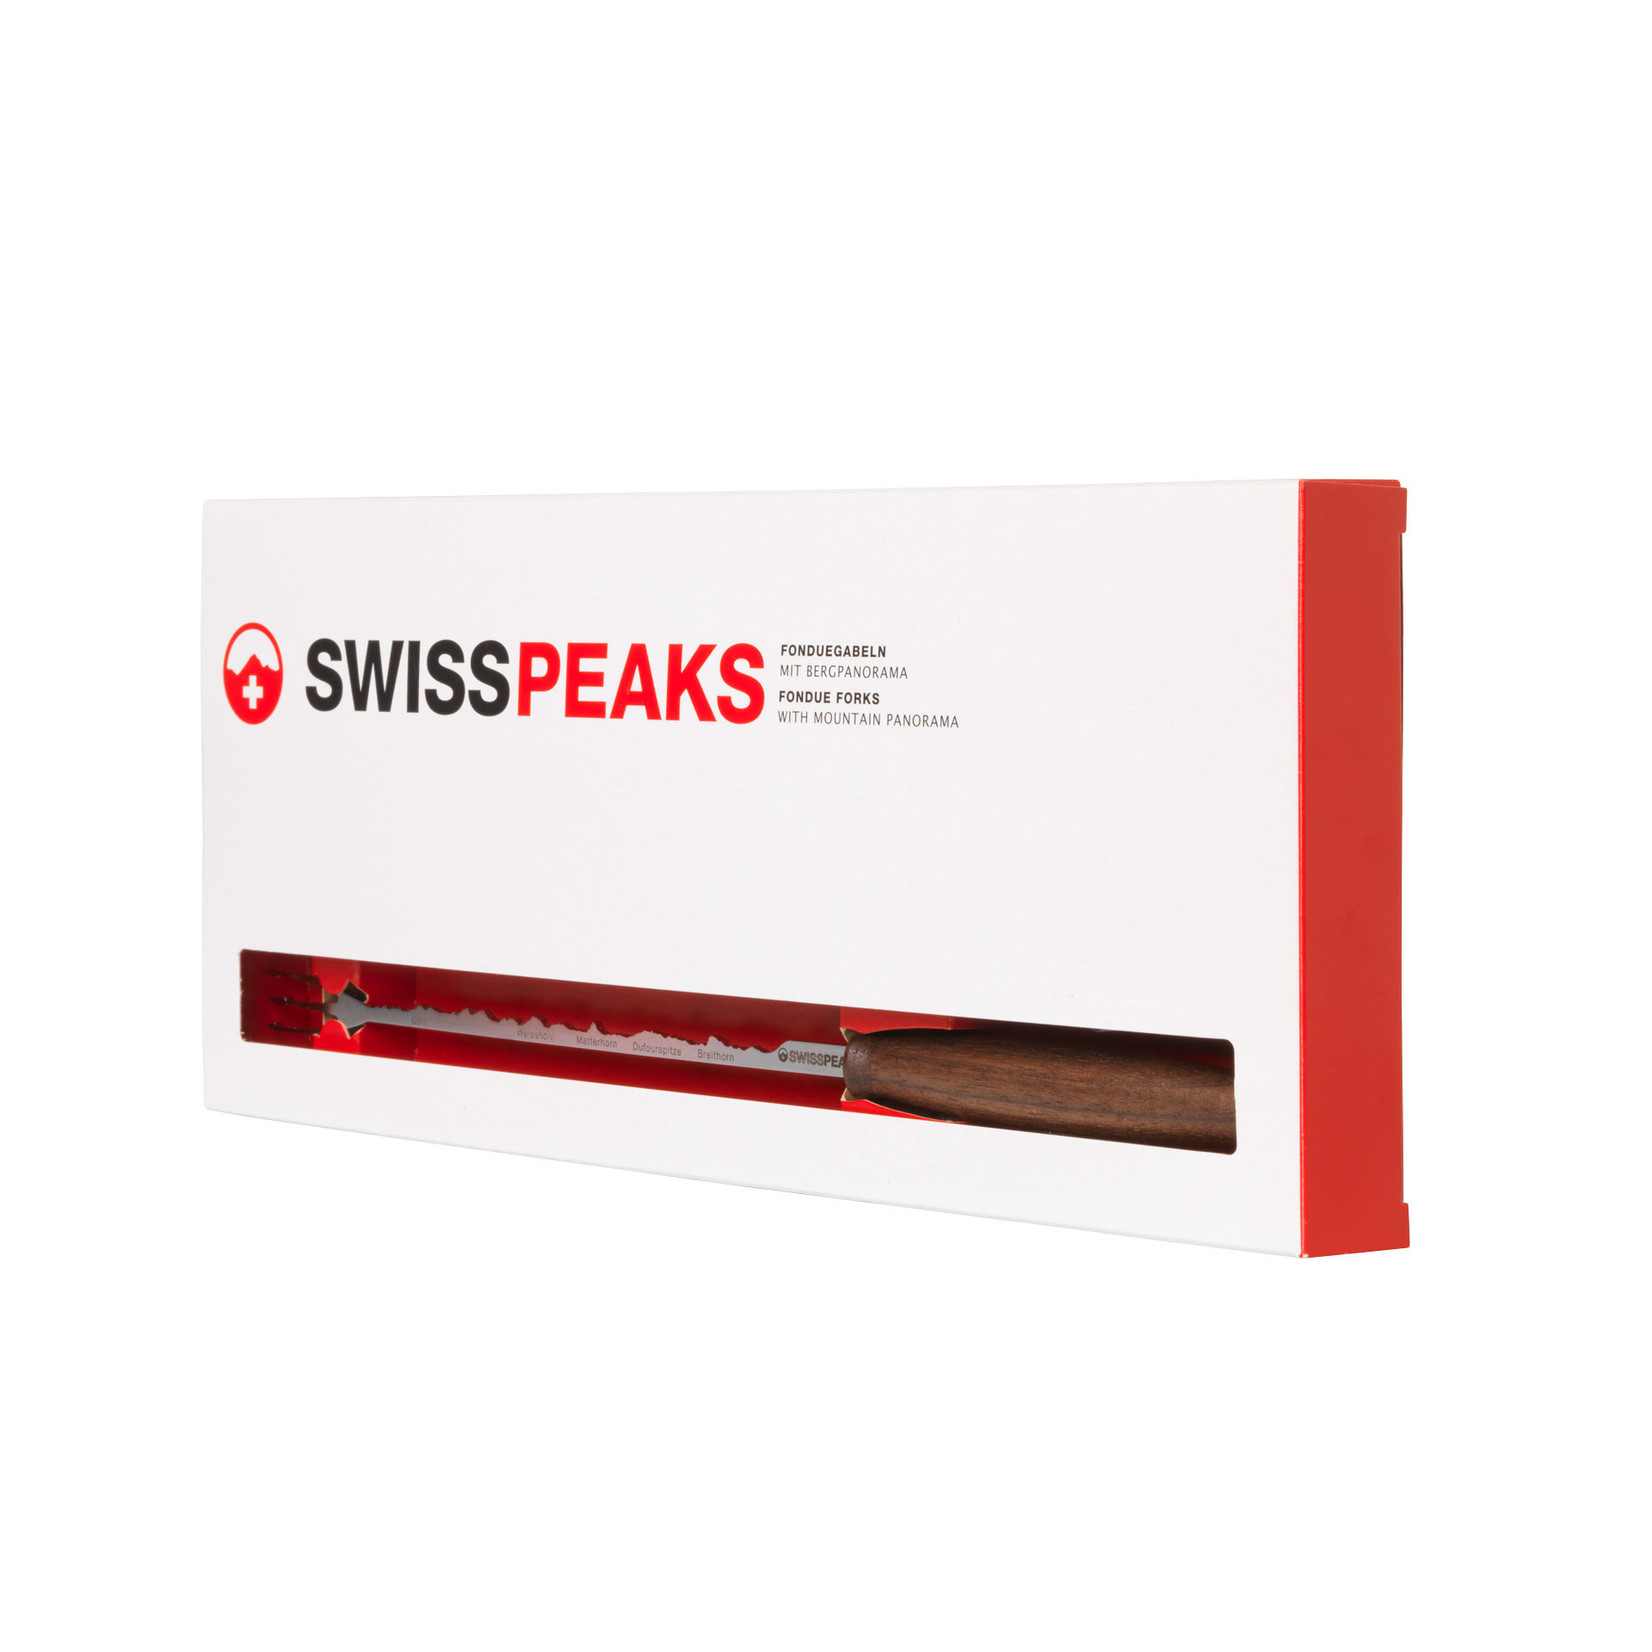 SWISSPEAKS Fonduegabeln 4er Set Walliser Alps Nussbaumgriff